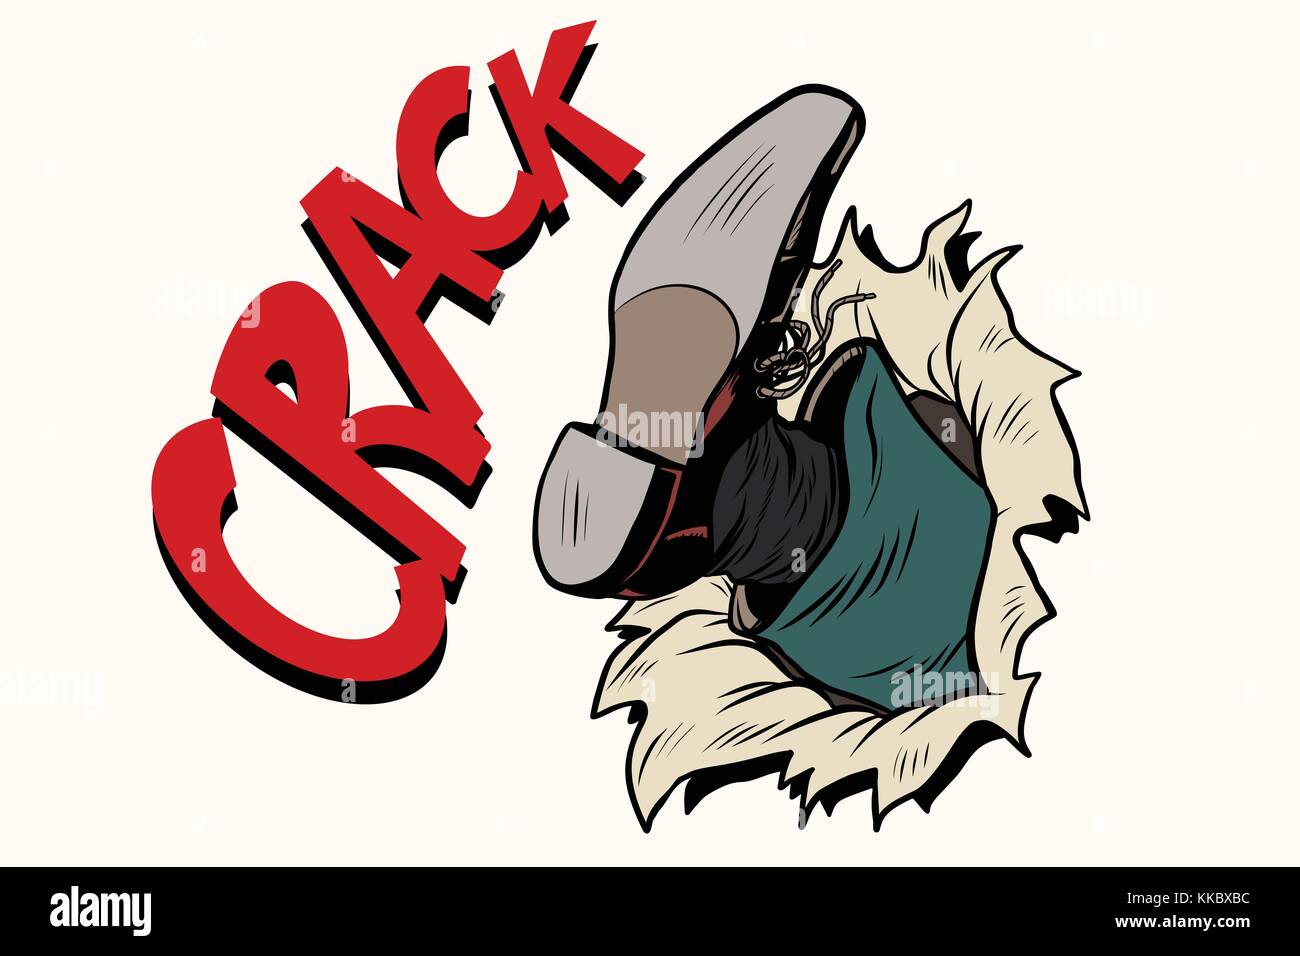 Crack kick Durchbruch Papier Hintergrund. pop art retro Vektor illustration Stock Vektor